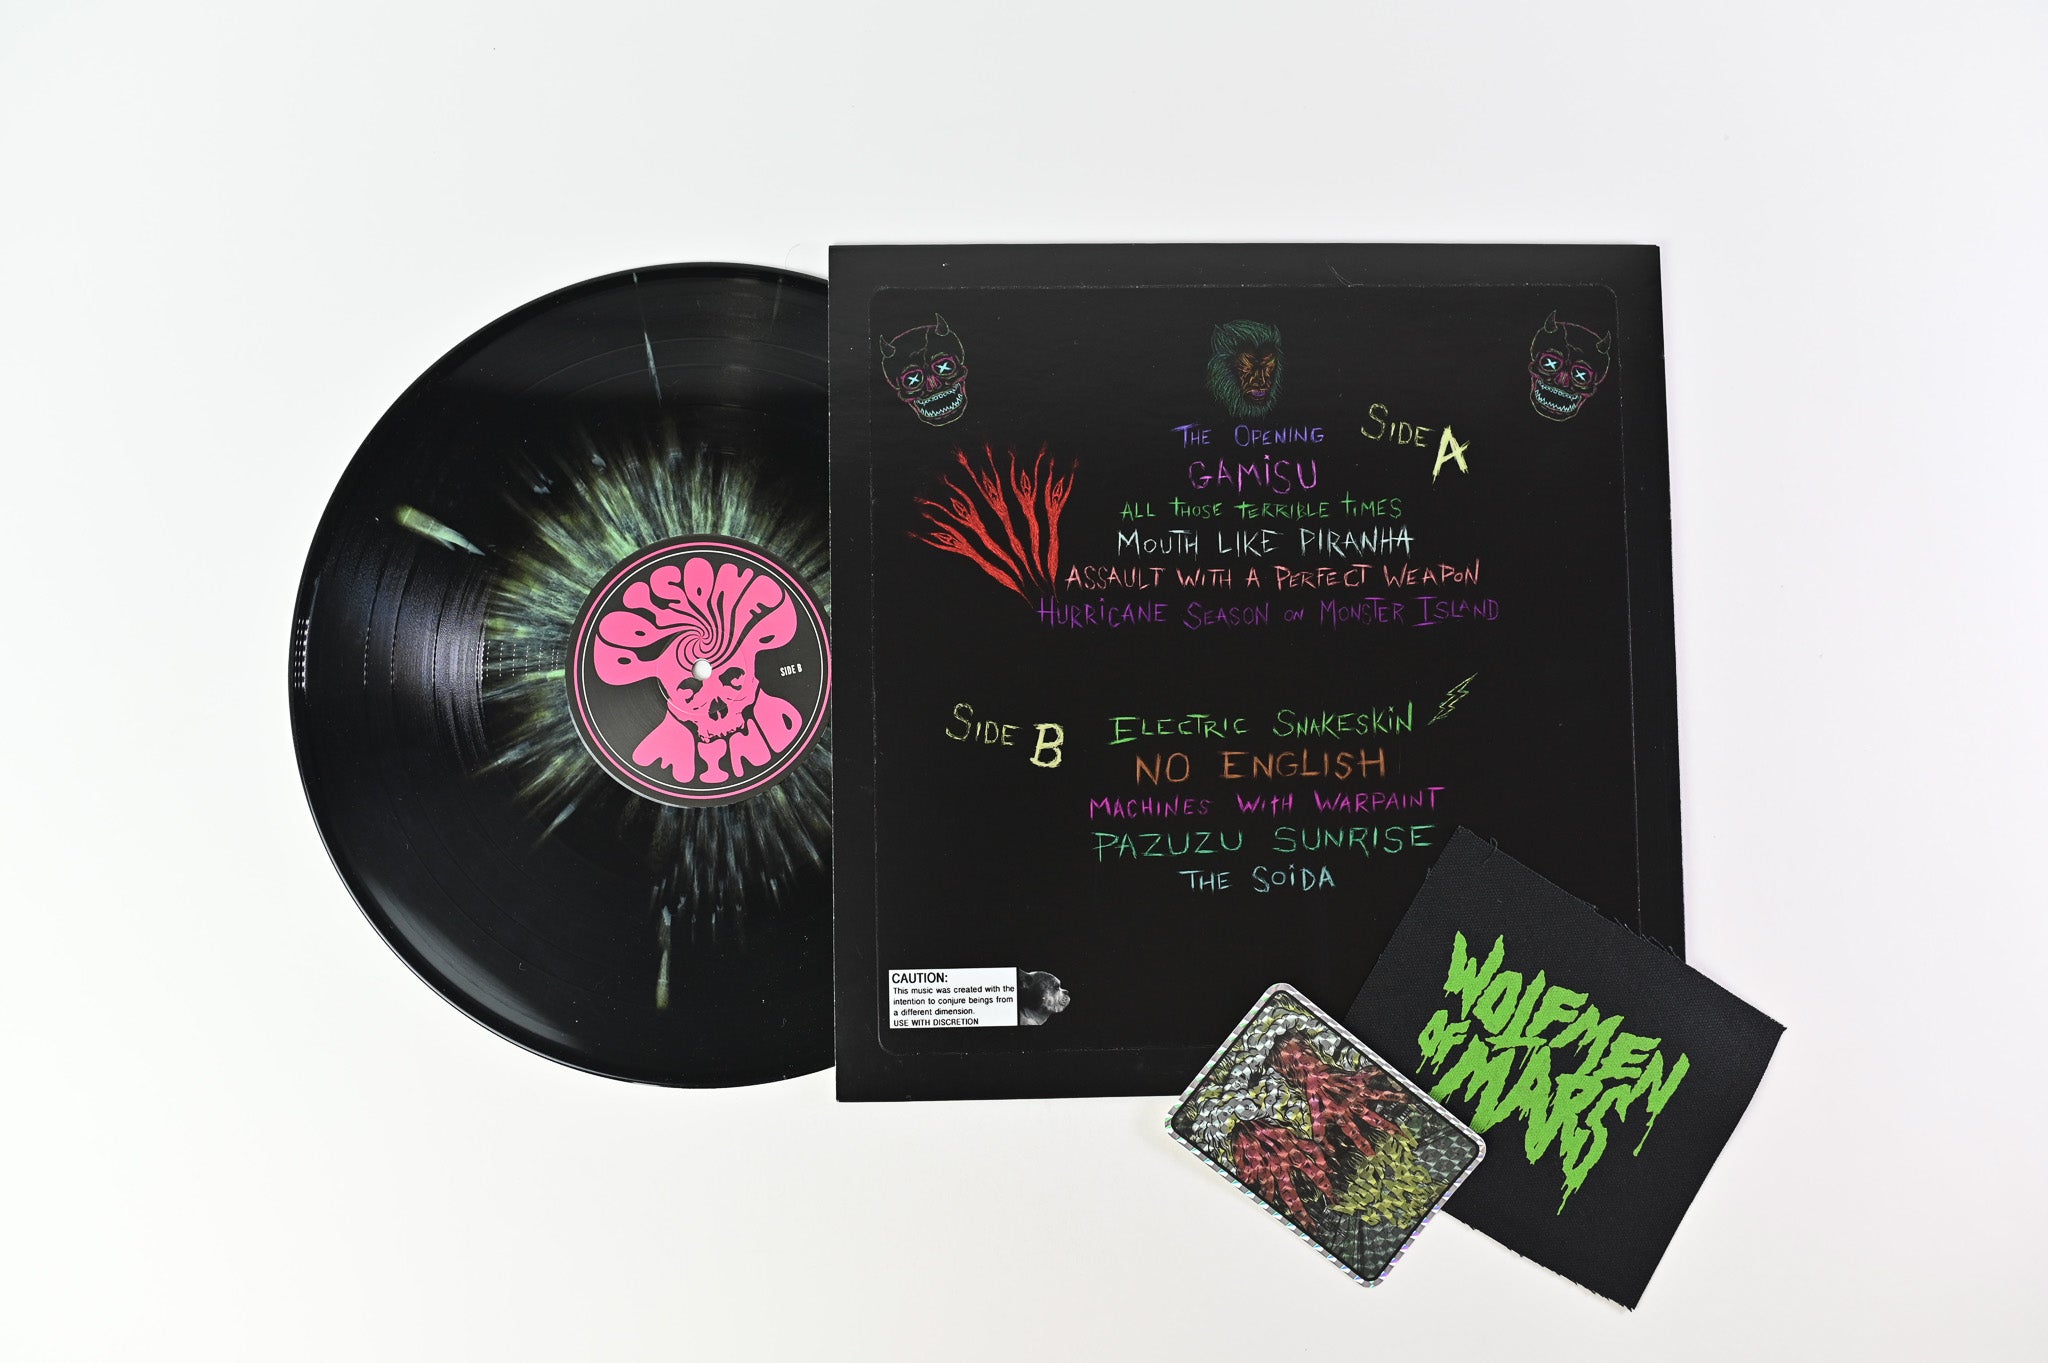 Wolfmen Of Mars - Gamisu on Poisoned Mind Ltd Numbered Black / Green Vinyl